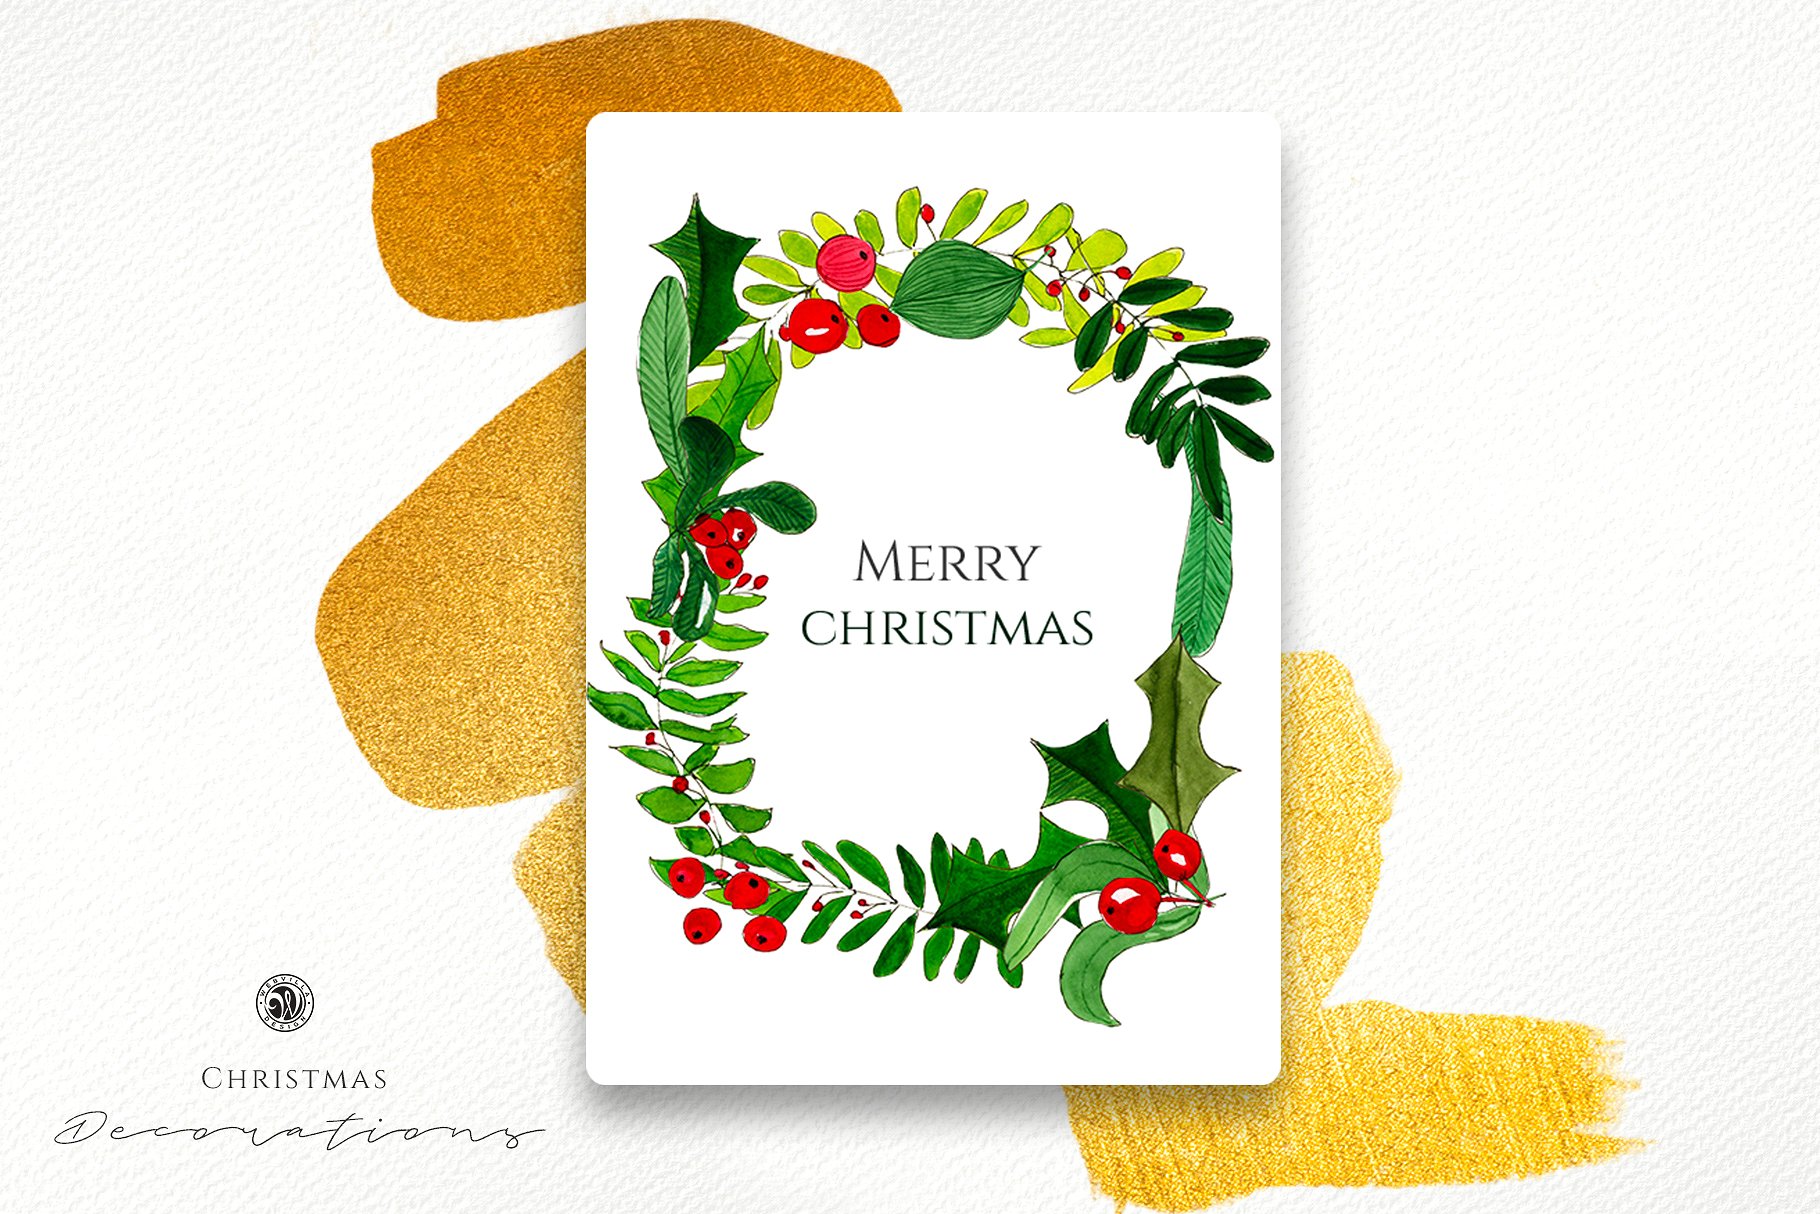 绿色水彩圣诞花卉装饰剪贴画合集 Watercolor Christmas Decorations插图(4)